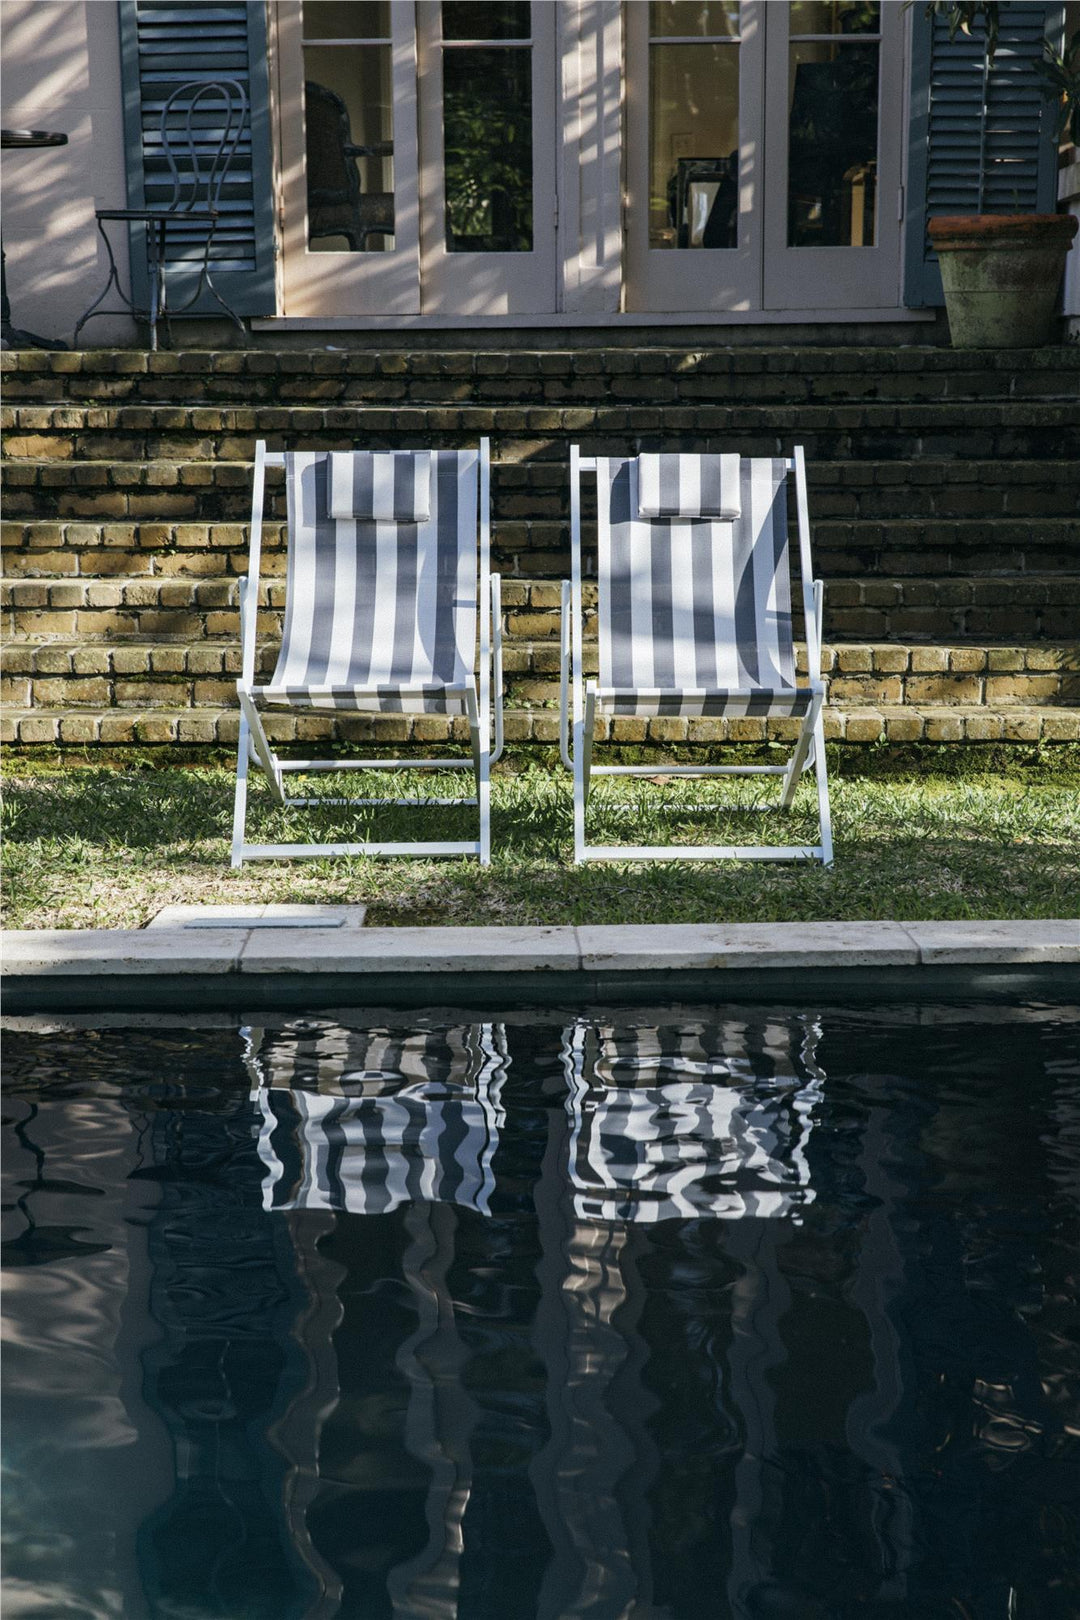 Poolside Gossip, Bebe Folding Beach Chair, Set of 2 - White/Black - 1-Pack